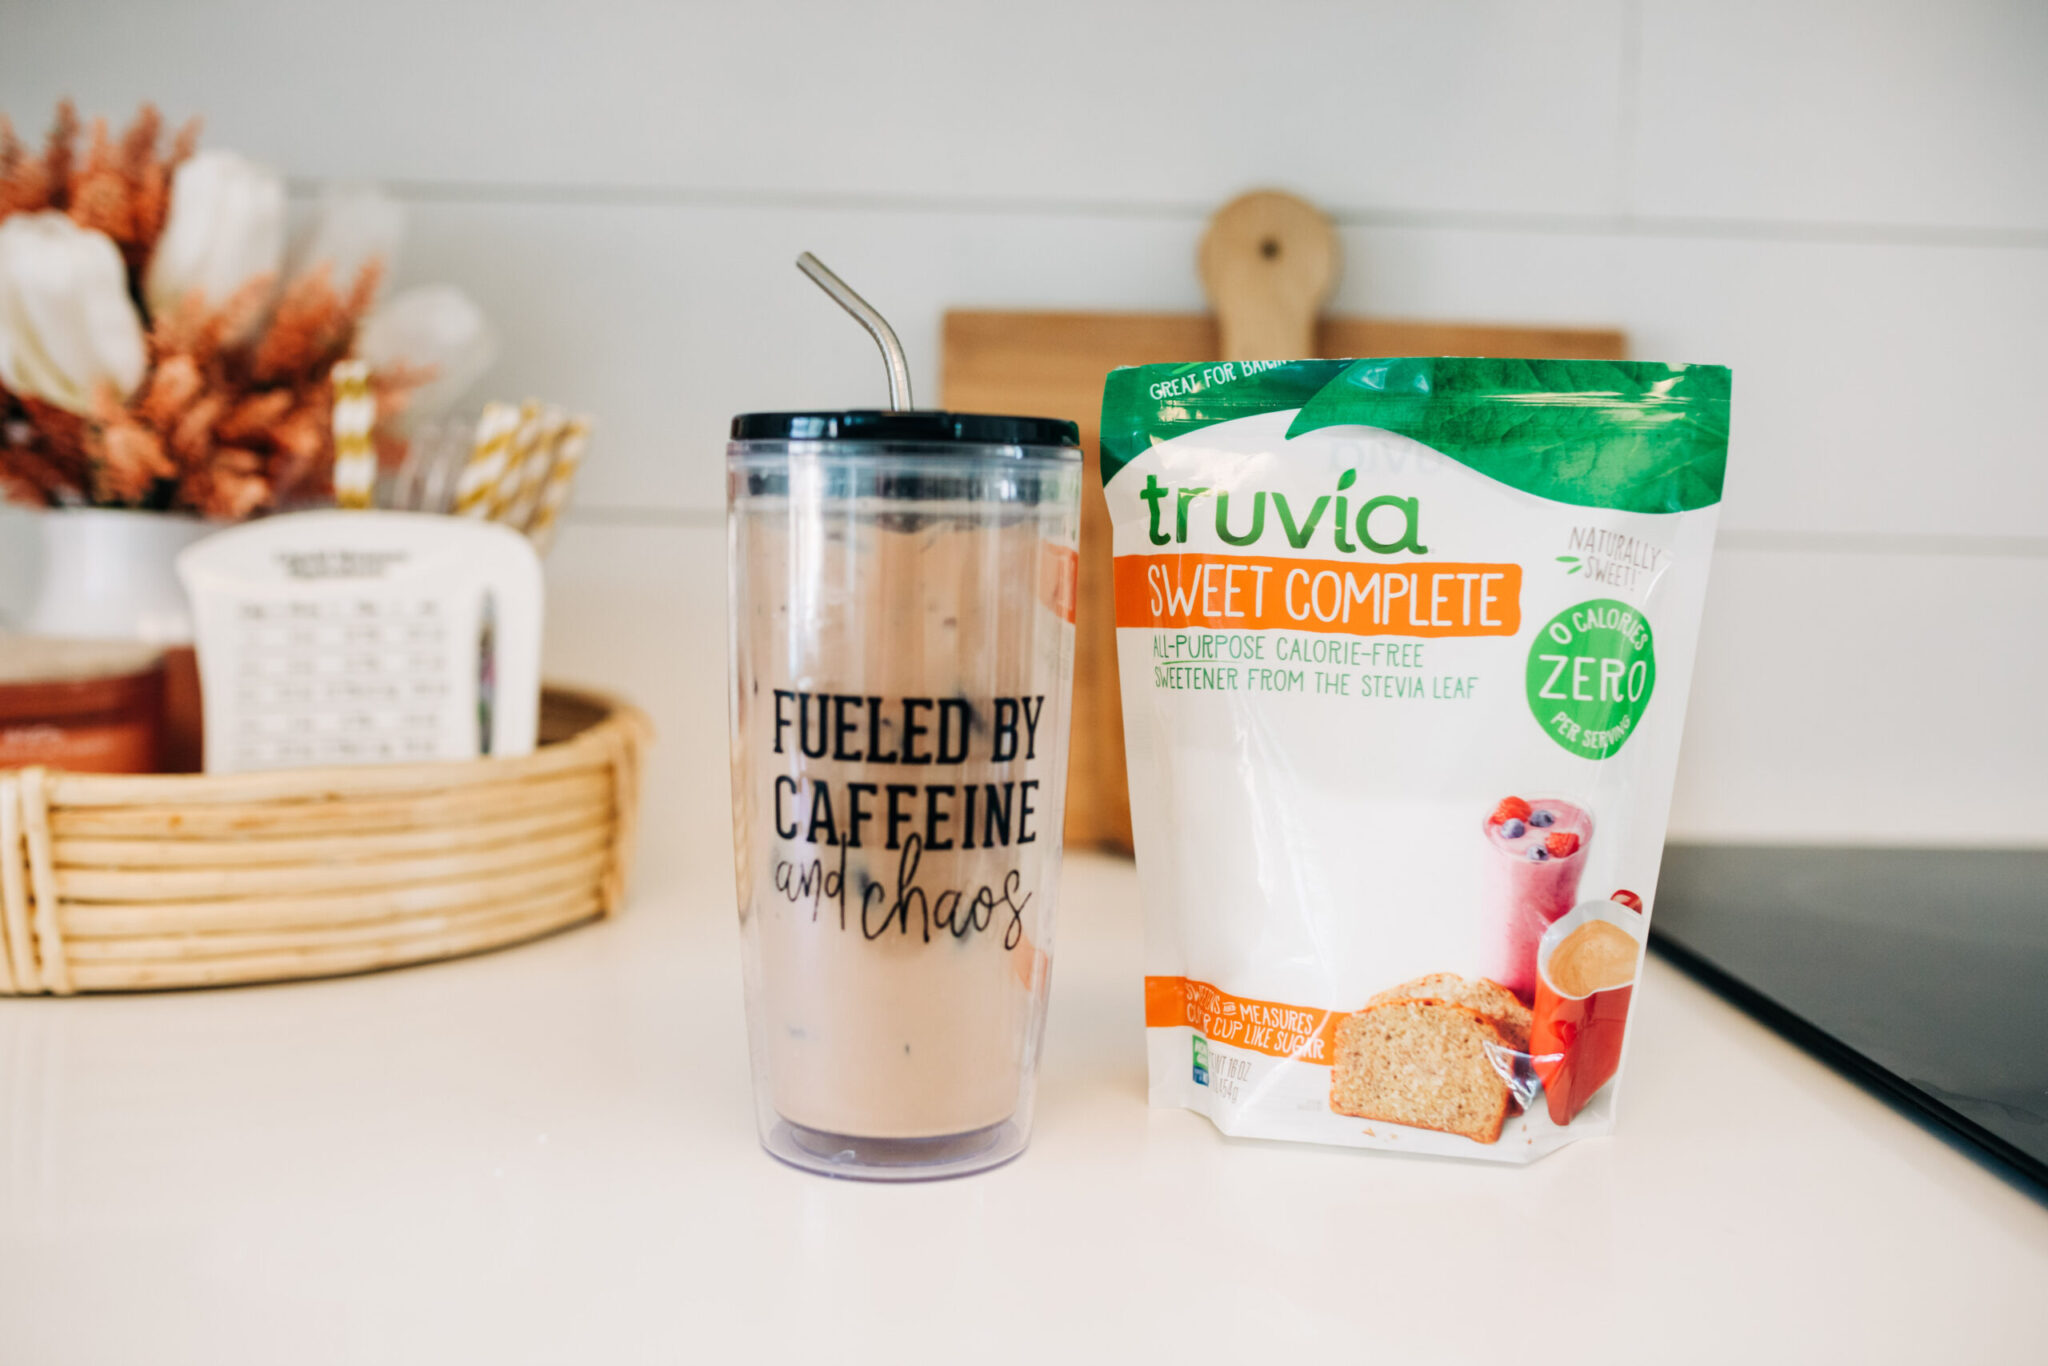 #keto #lowcarb #icedcoffee keto-friendly iced coffee recipe made with Truvia Sweet Complete – an all-purpose, calorie-free sweetener #TruviaPartner